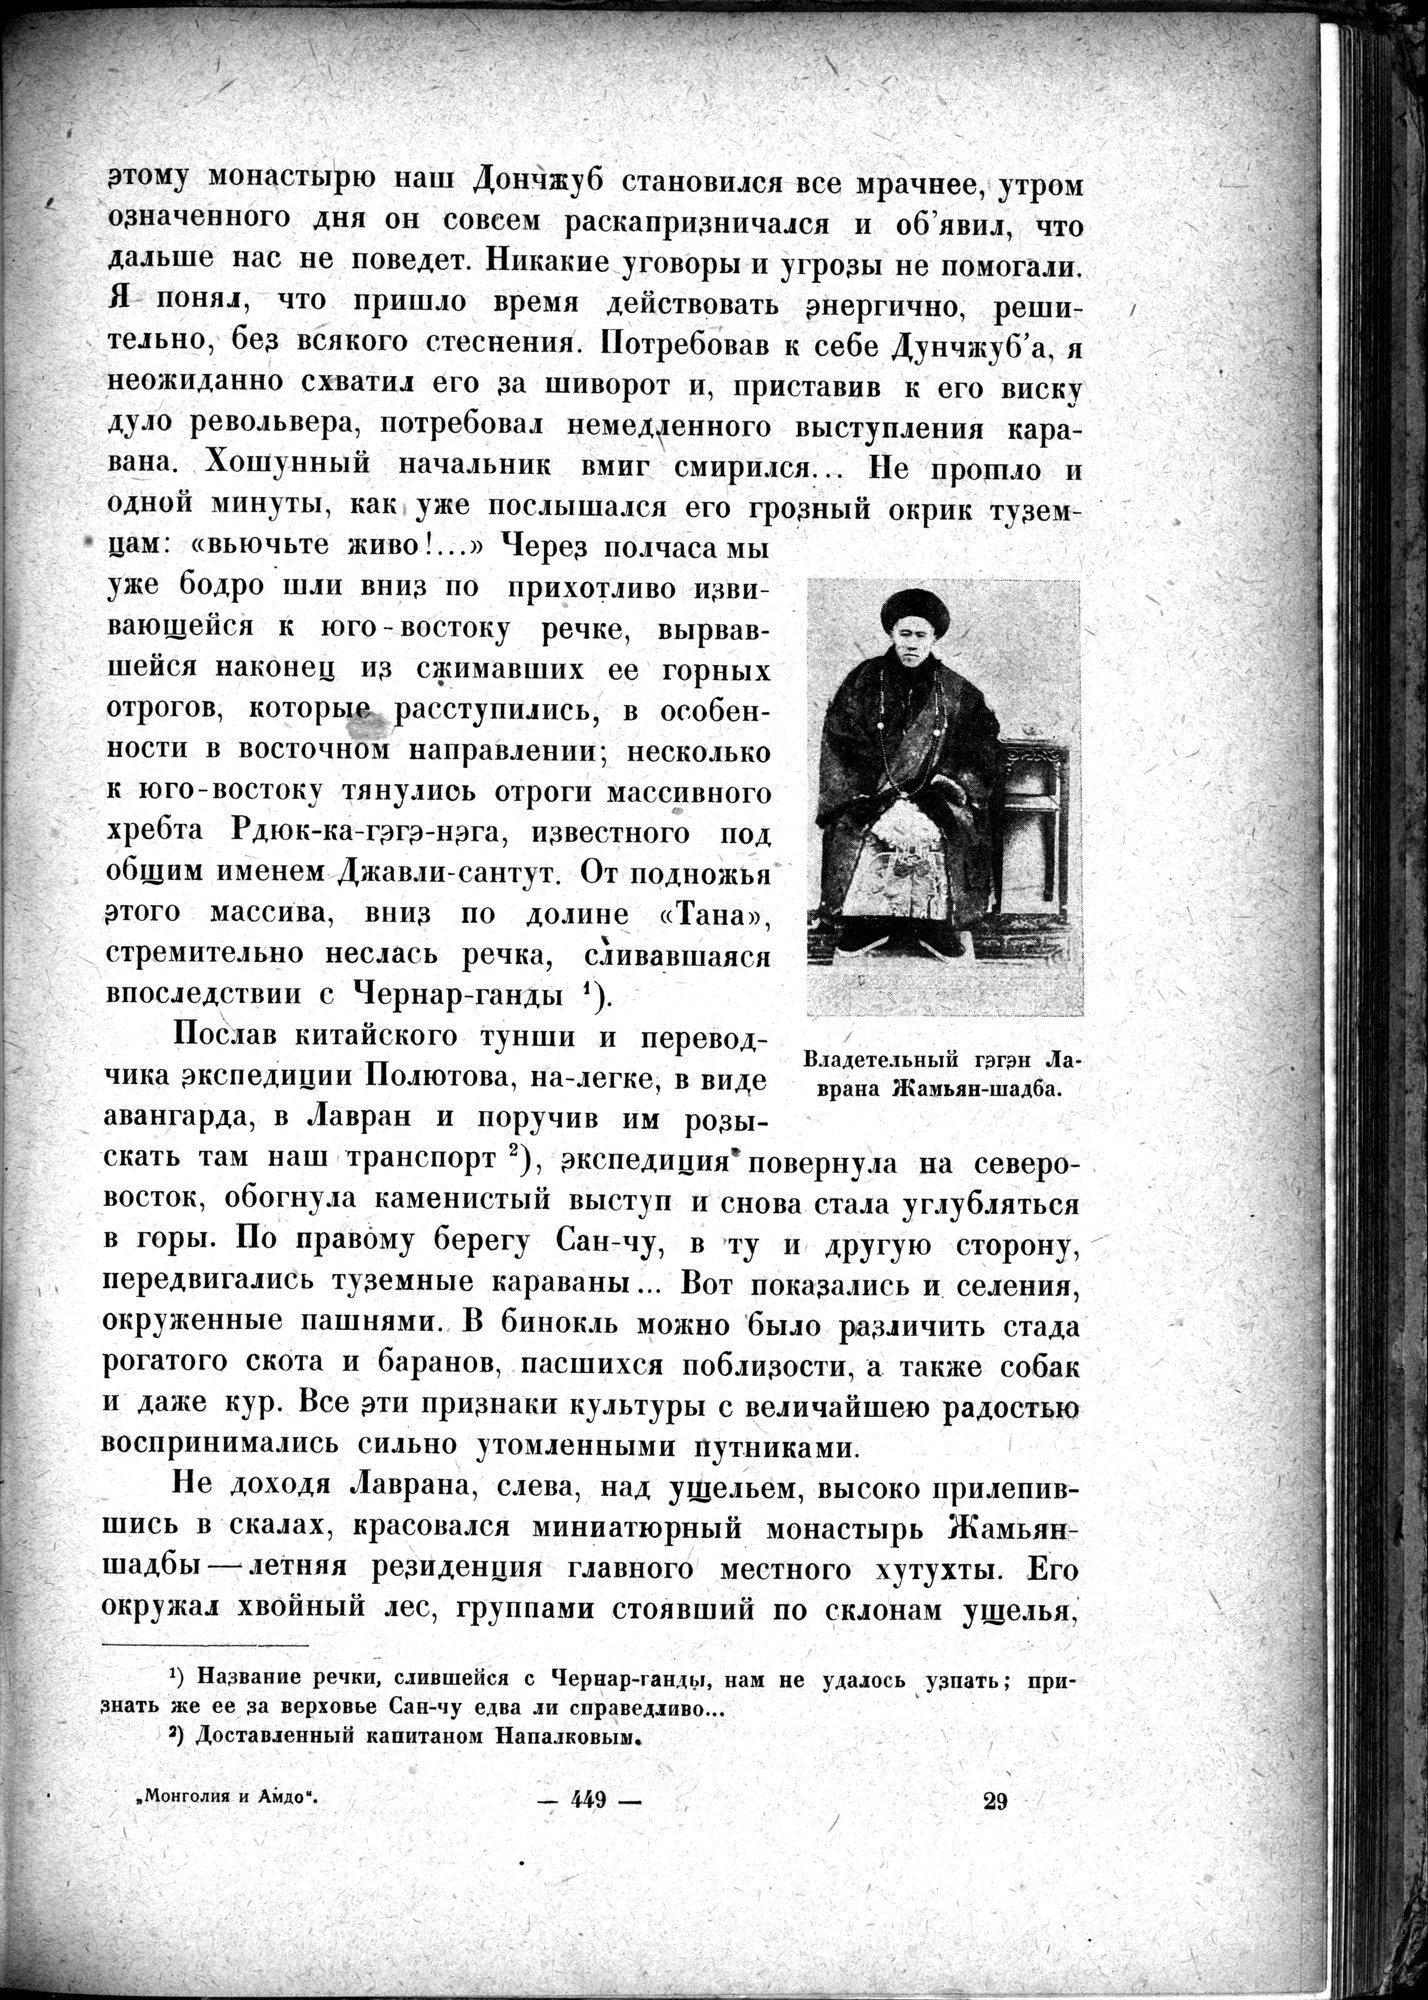 Mongoliya i Amdo i mertby gorod Khara-Khoto : vol.1 / Page 511 (Grayscale High Resolution Image)